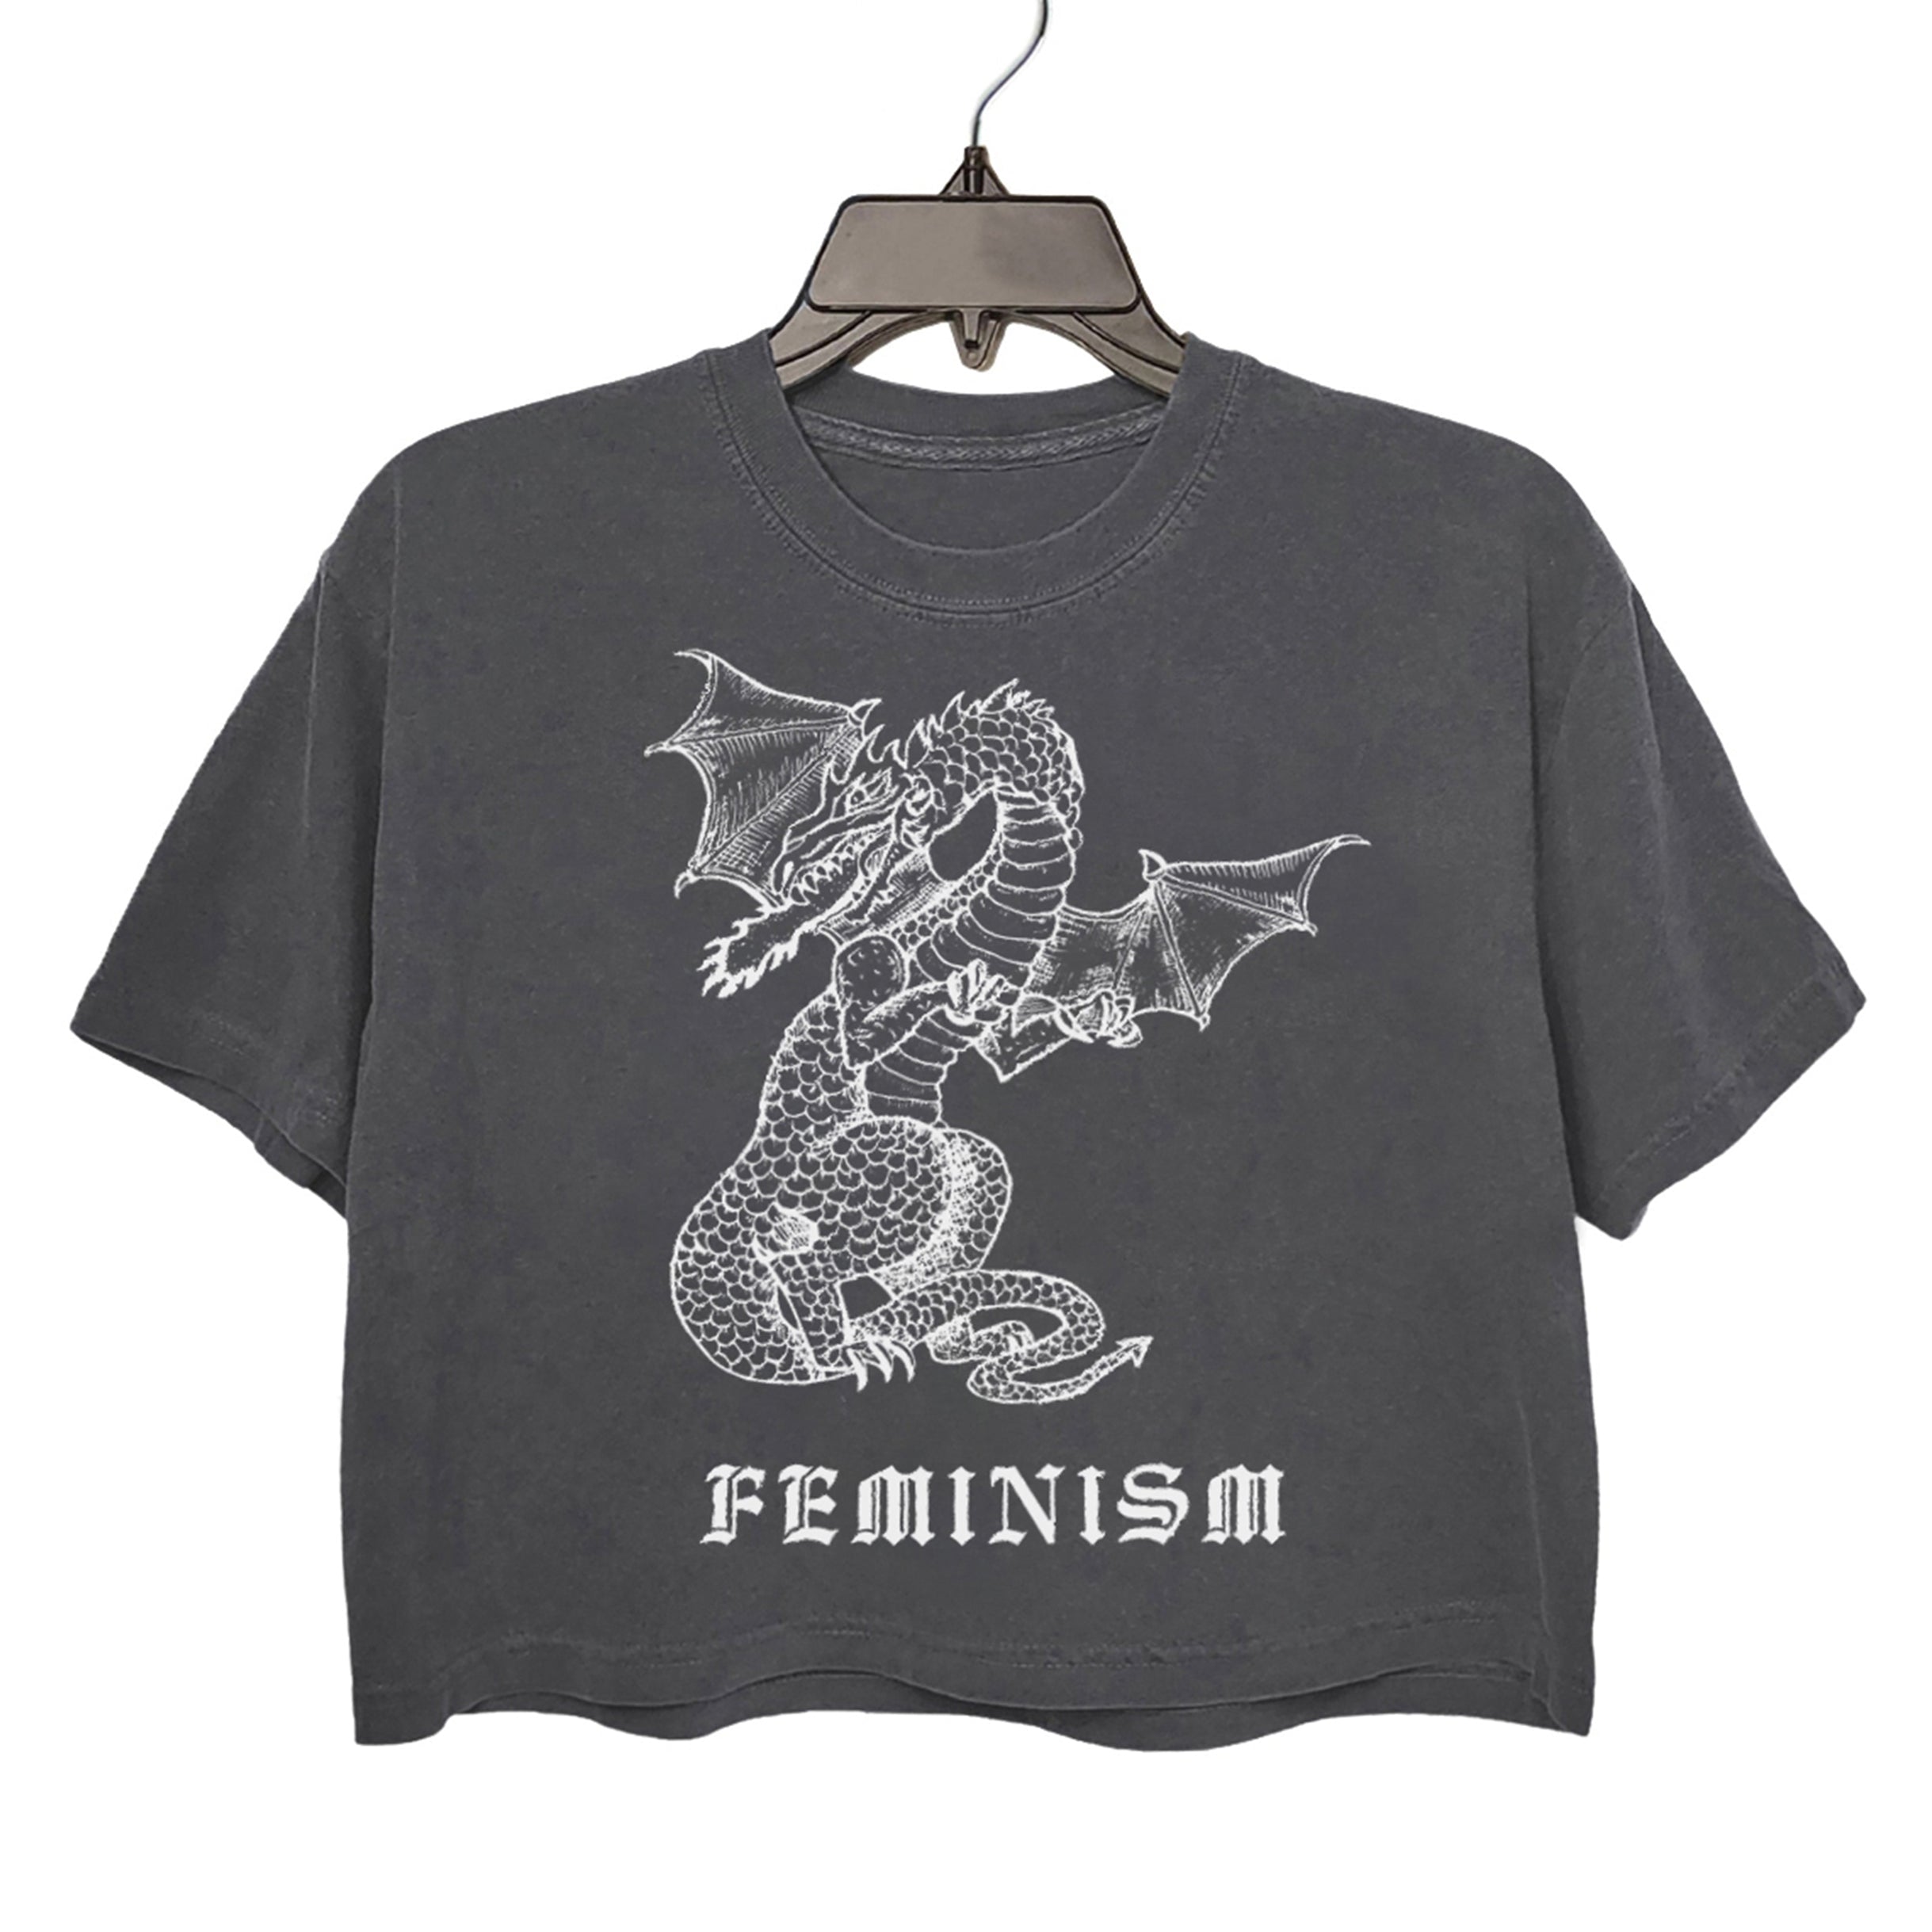 White Dragon Feminism Crop Tee For Women